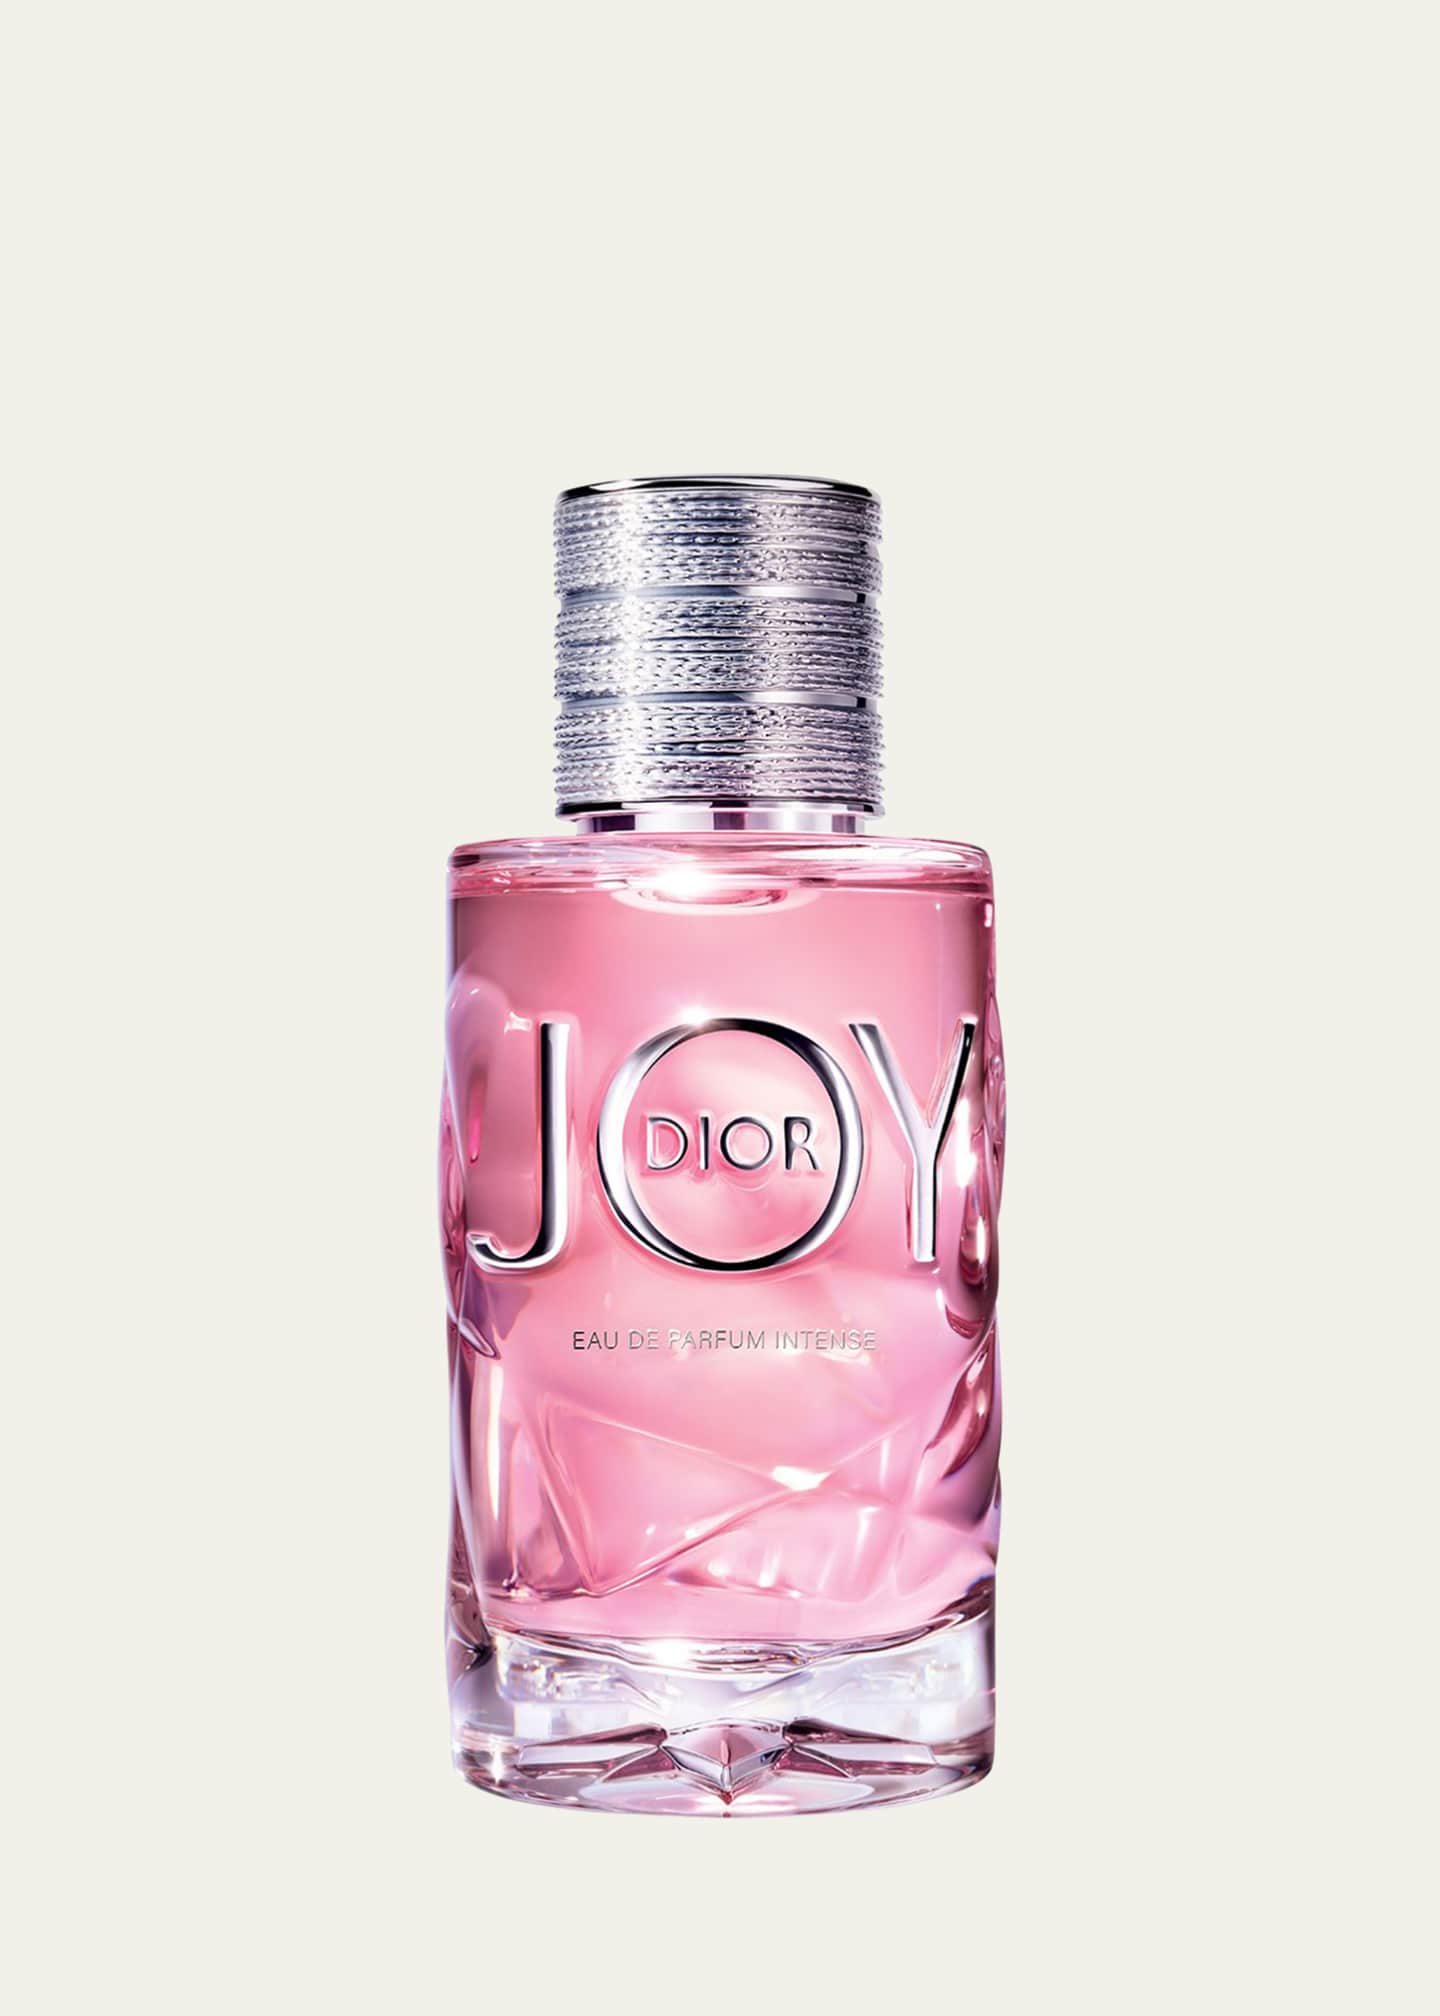 Dior Joy by Dior Eau de Parfum Intense, 1.7 oz.